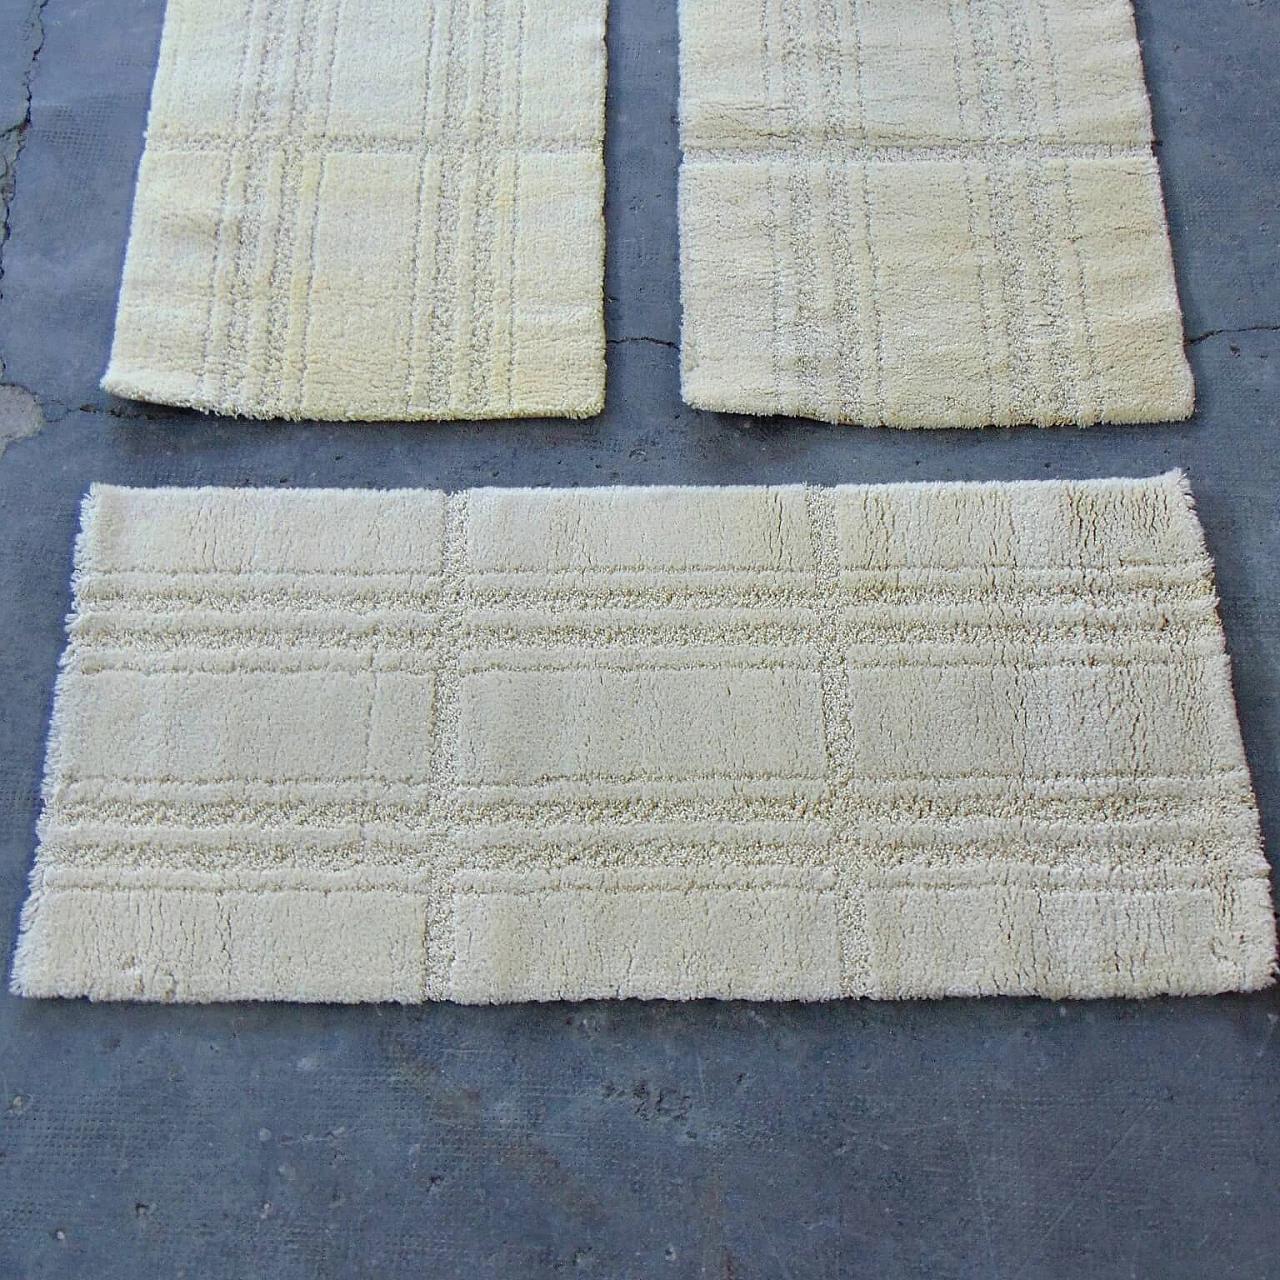 3 Tappeti danesi in pura lana vergine, tonalità crema, Eksport Hojer, anni '70 1069210